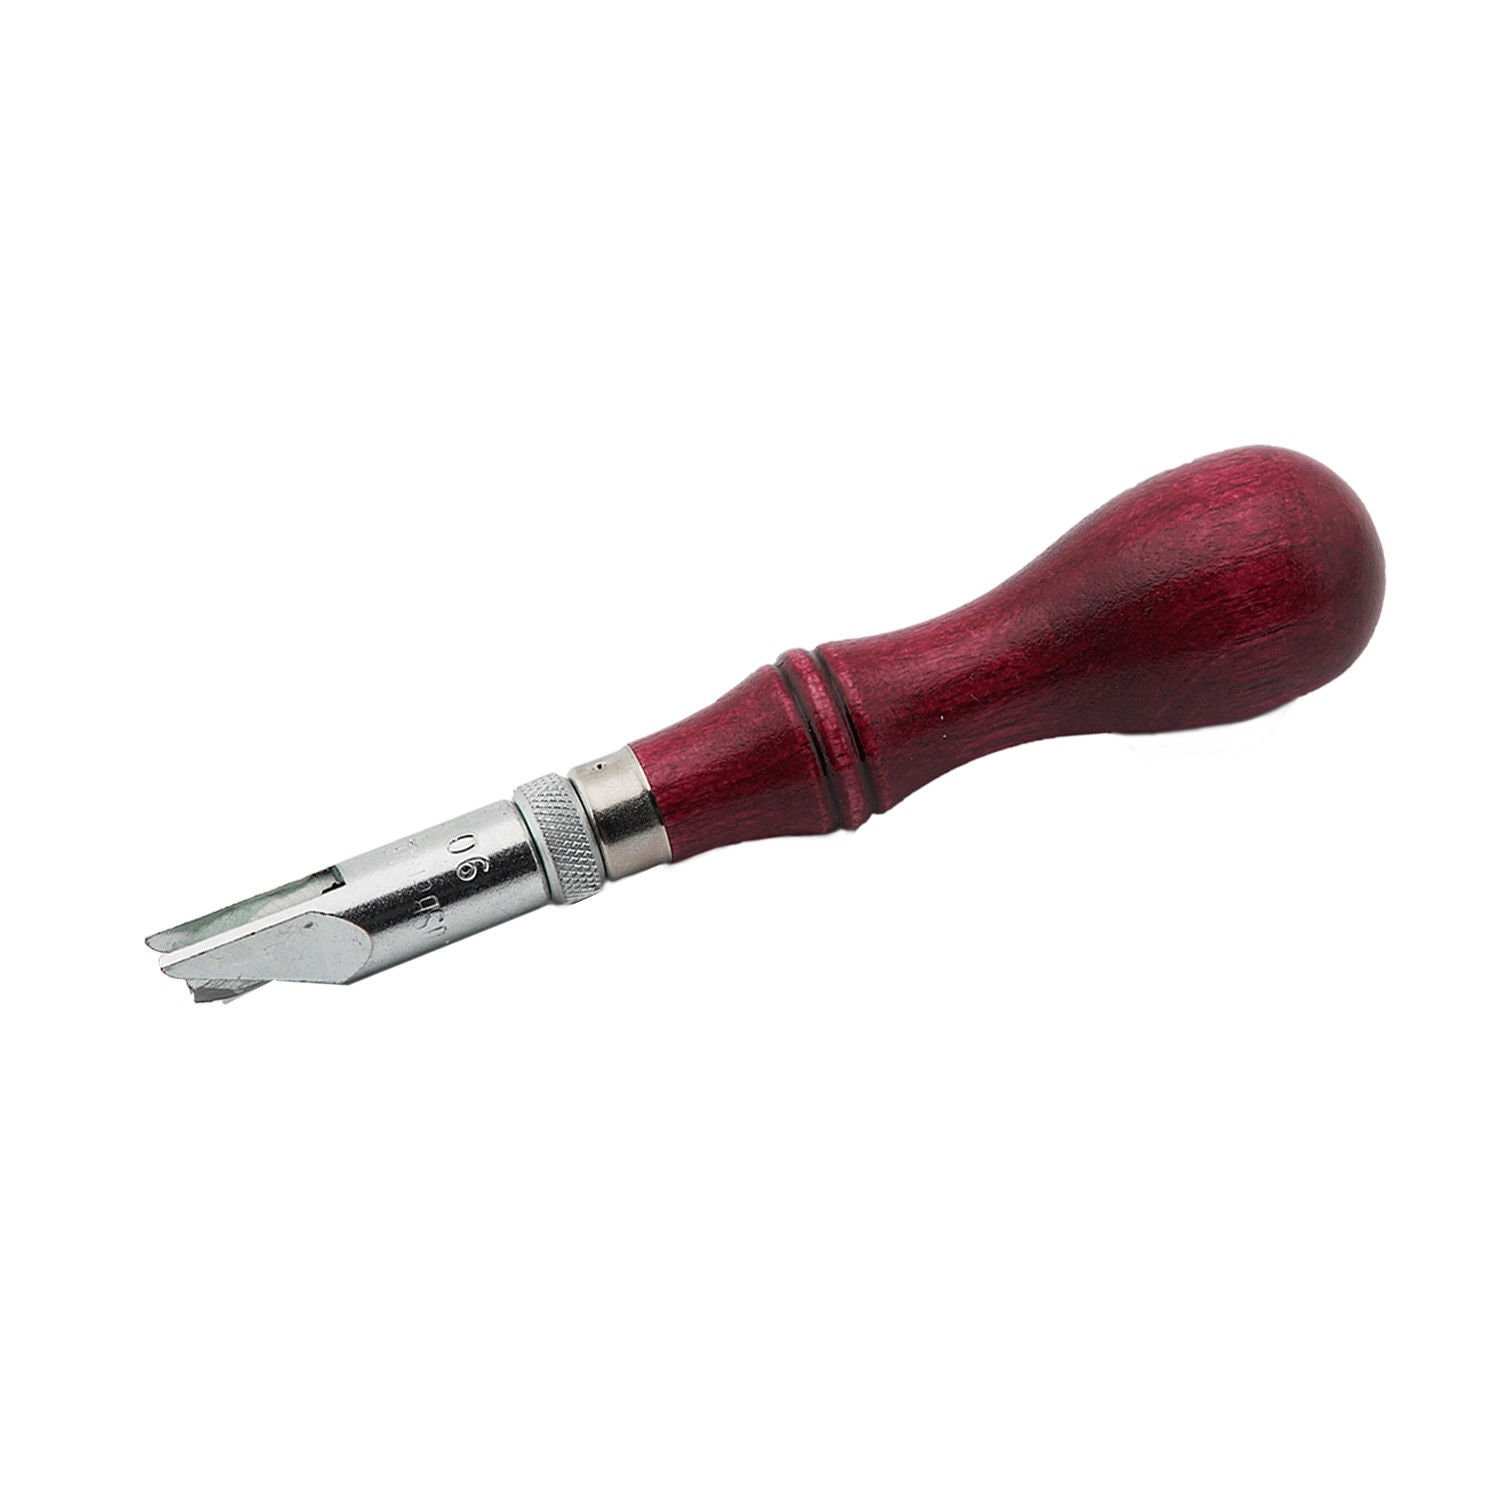 Snag Snab-it Needlepoint Essential Tool, Dritz Needlepoint Needle 